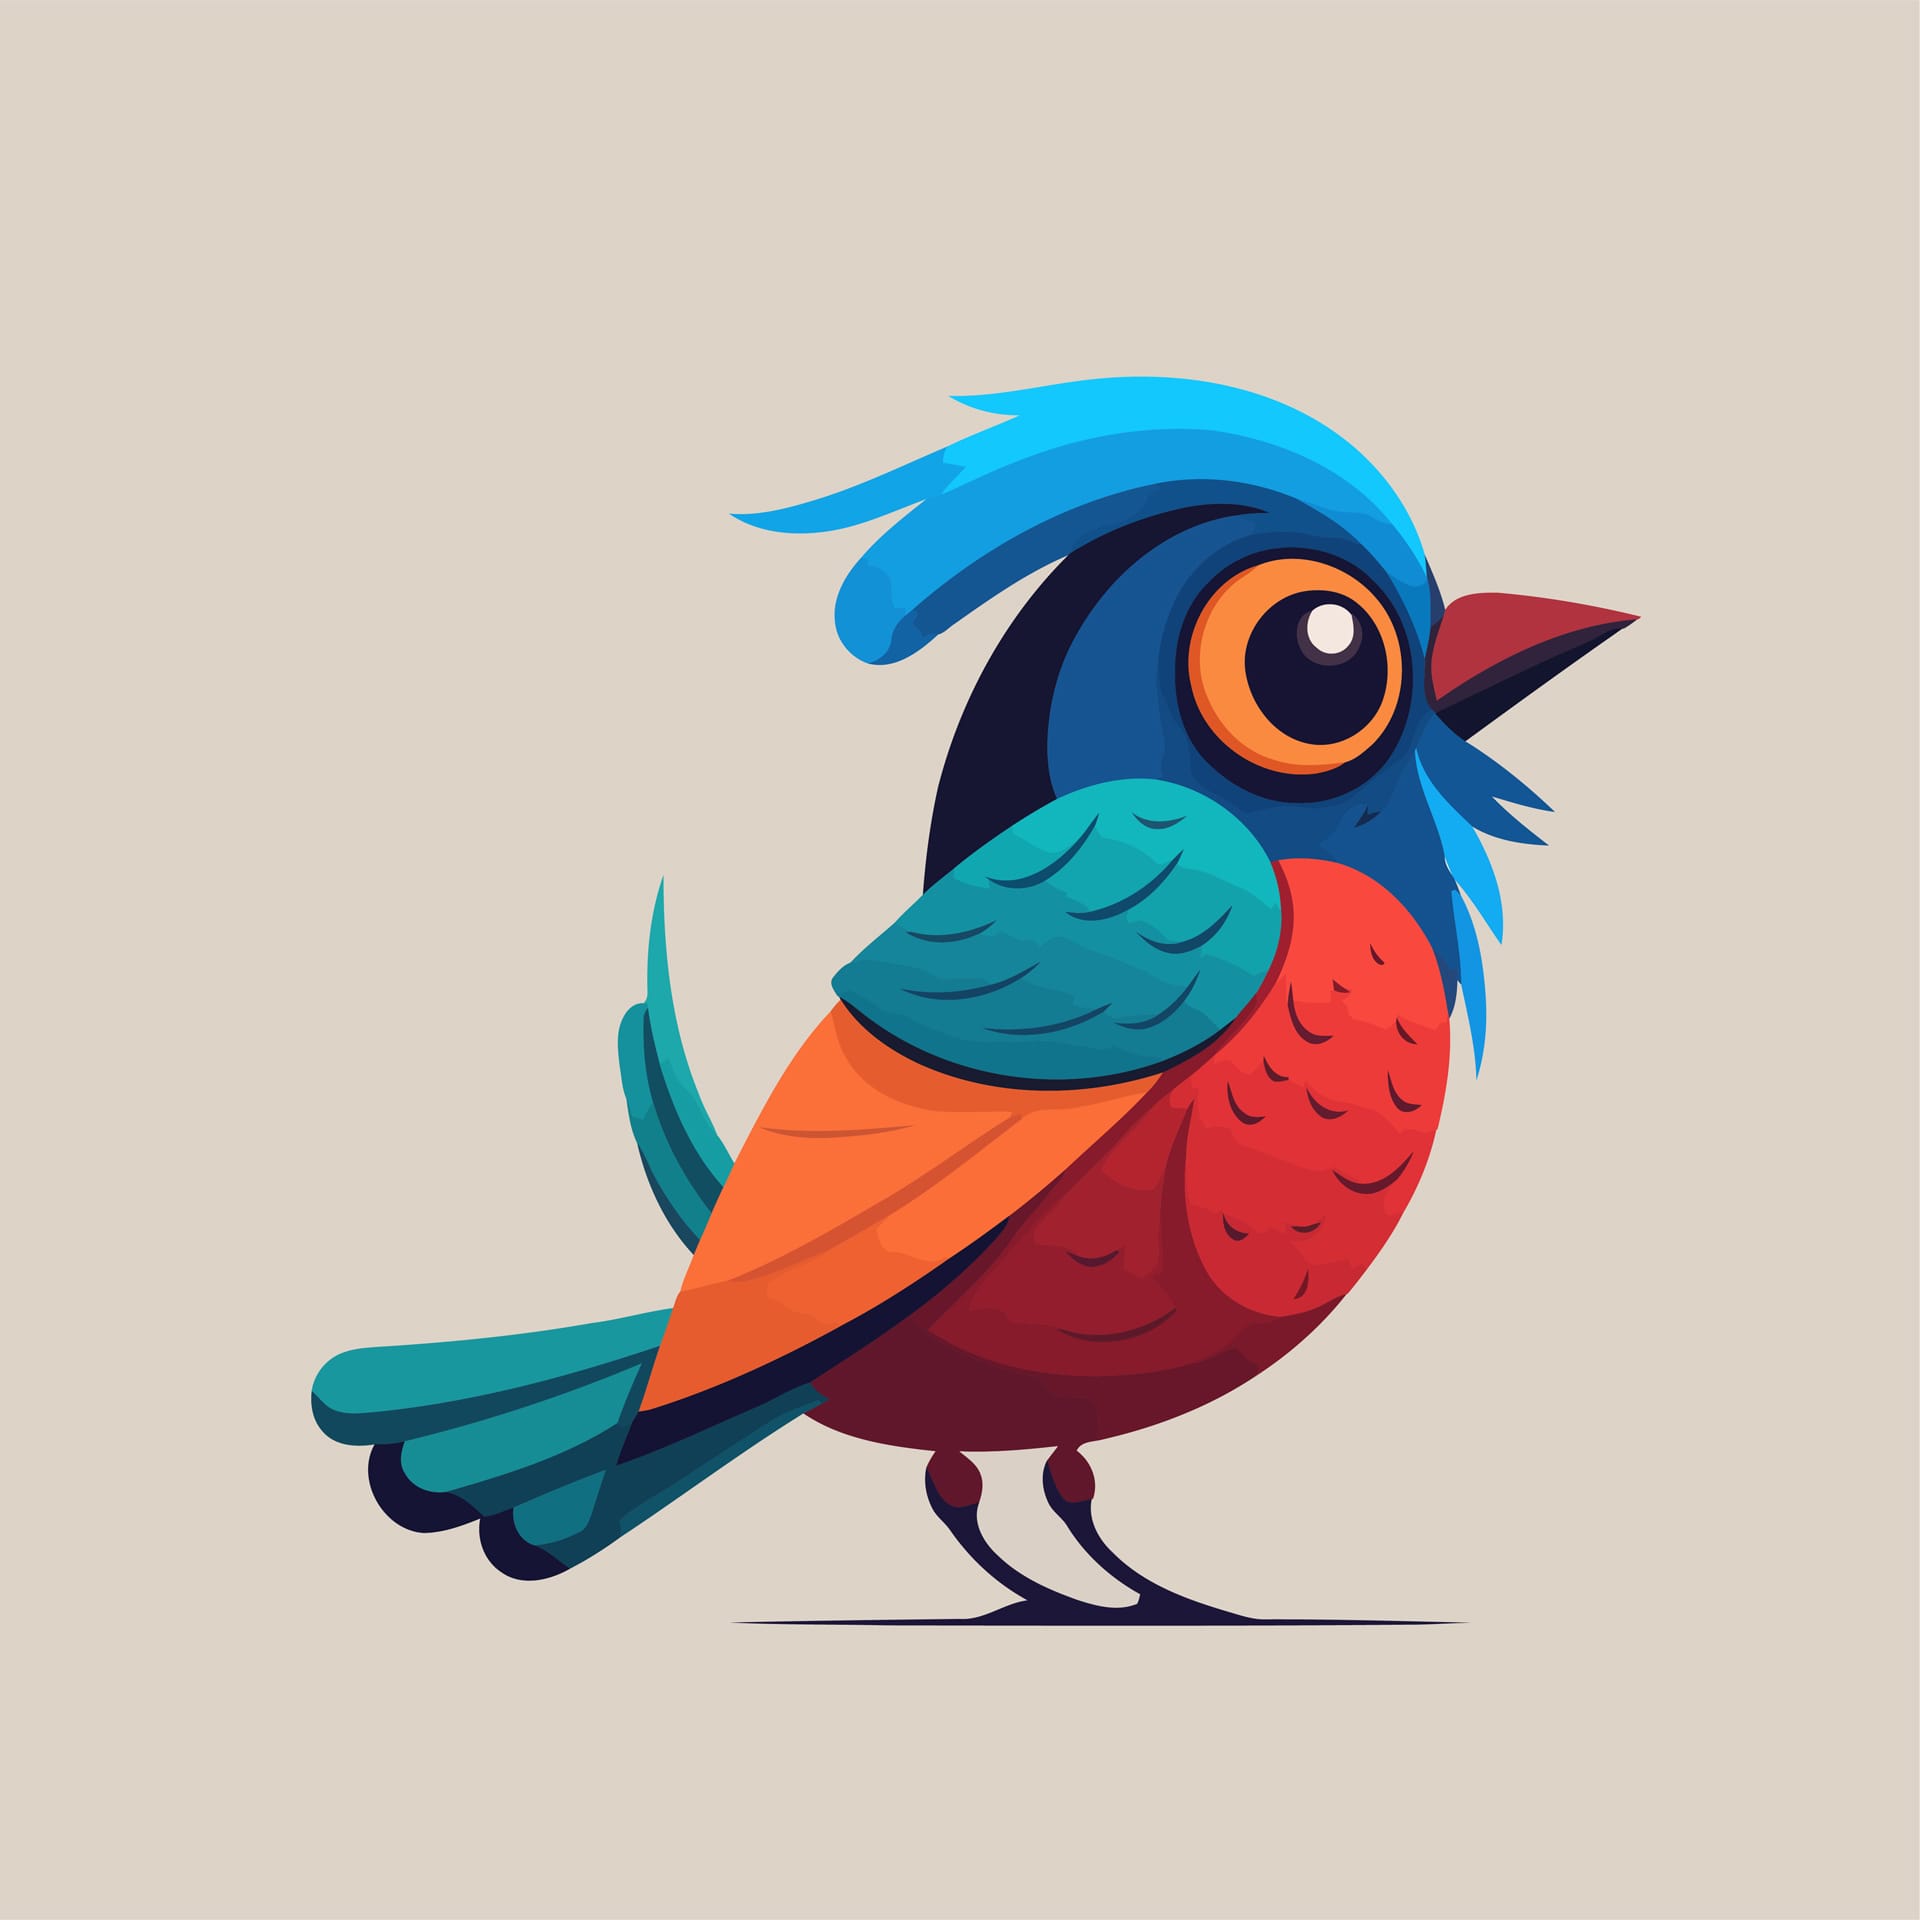 Cute little bird cartoon animal illustration logo mascot icon image